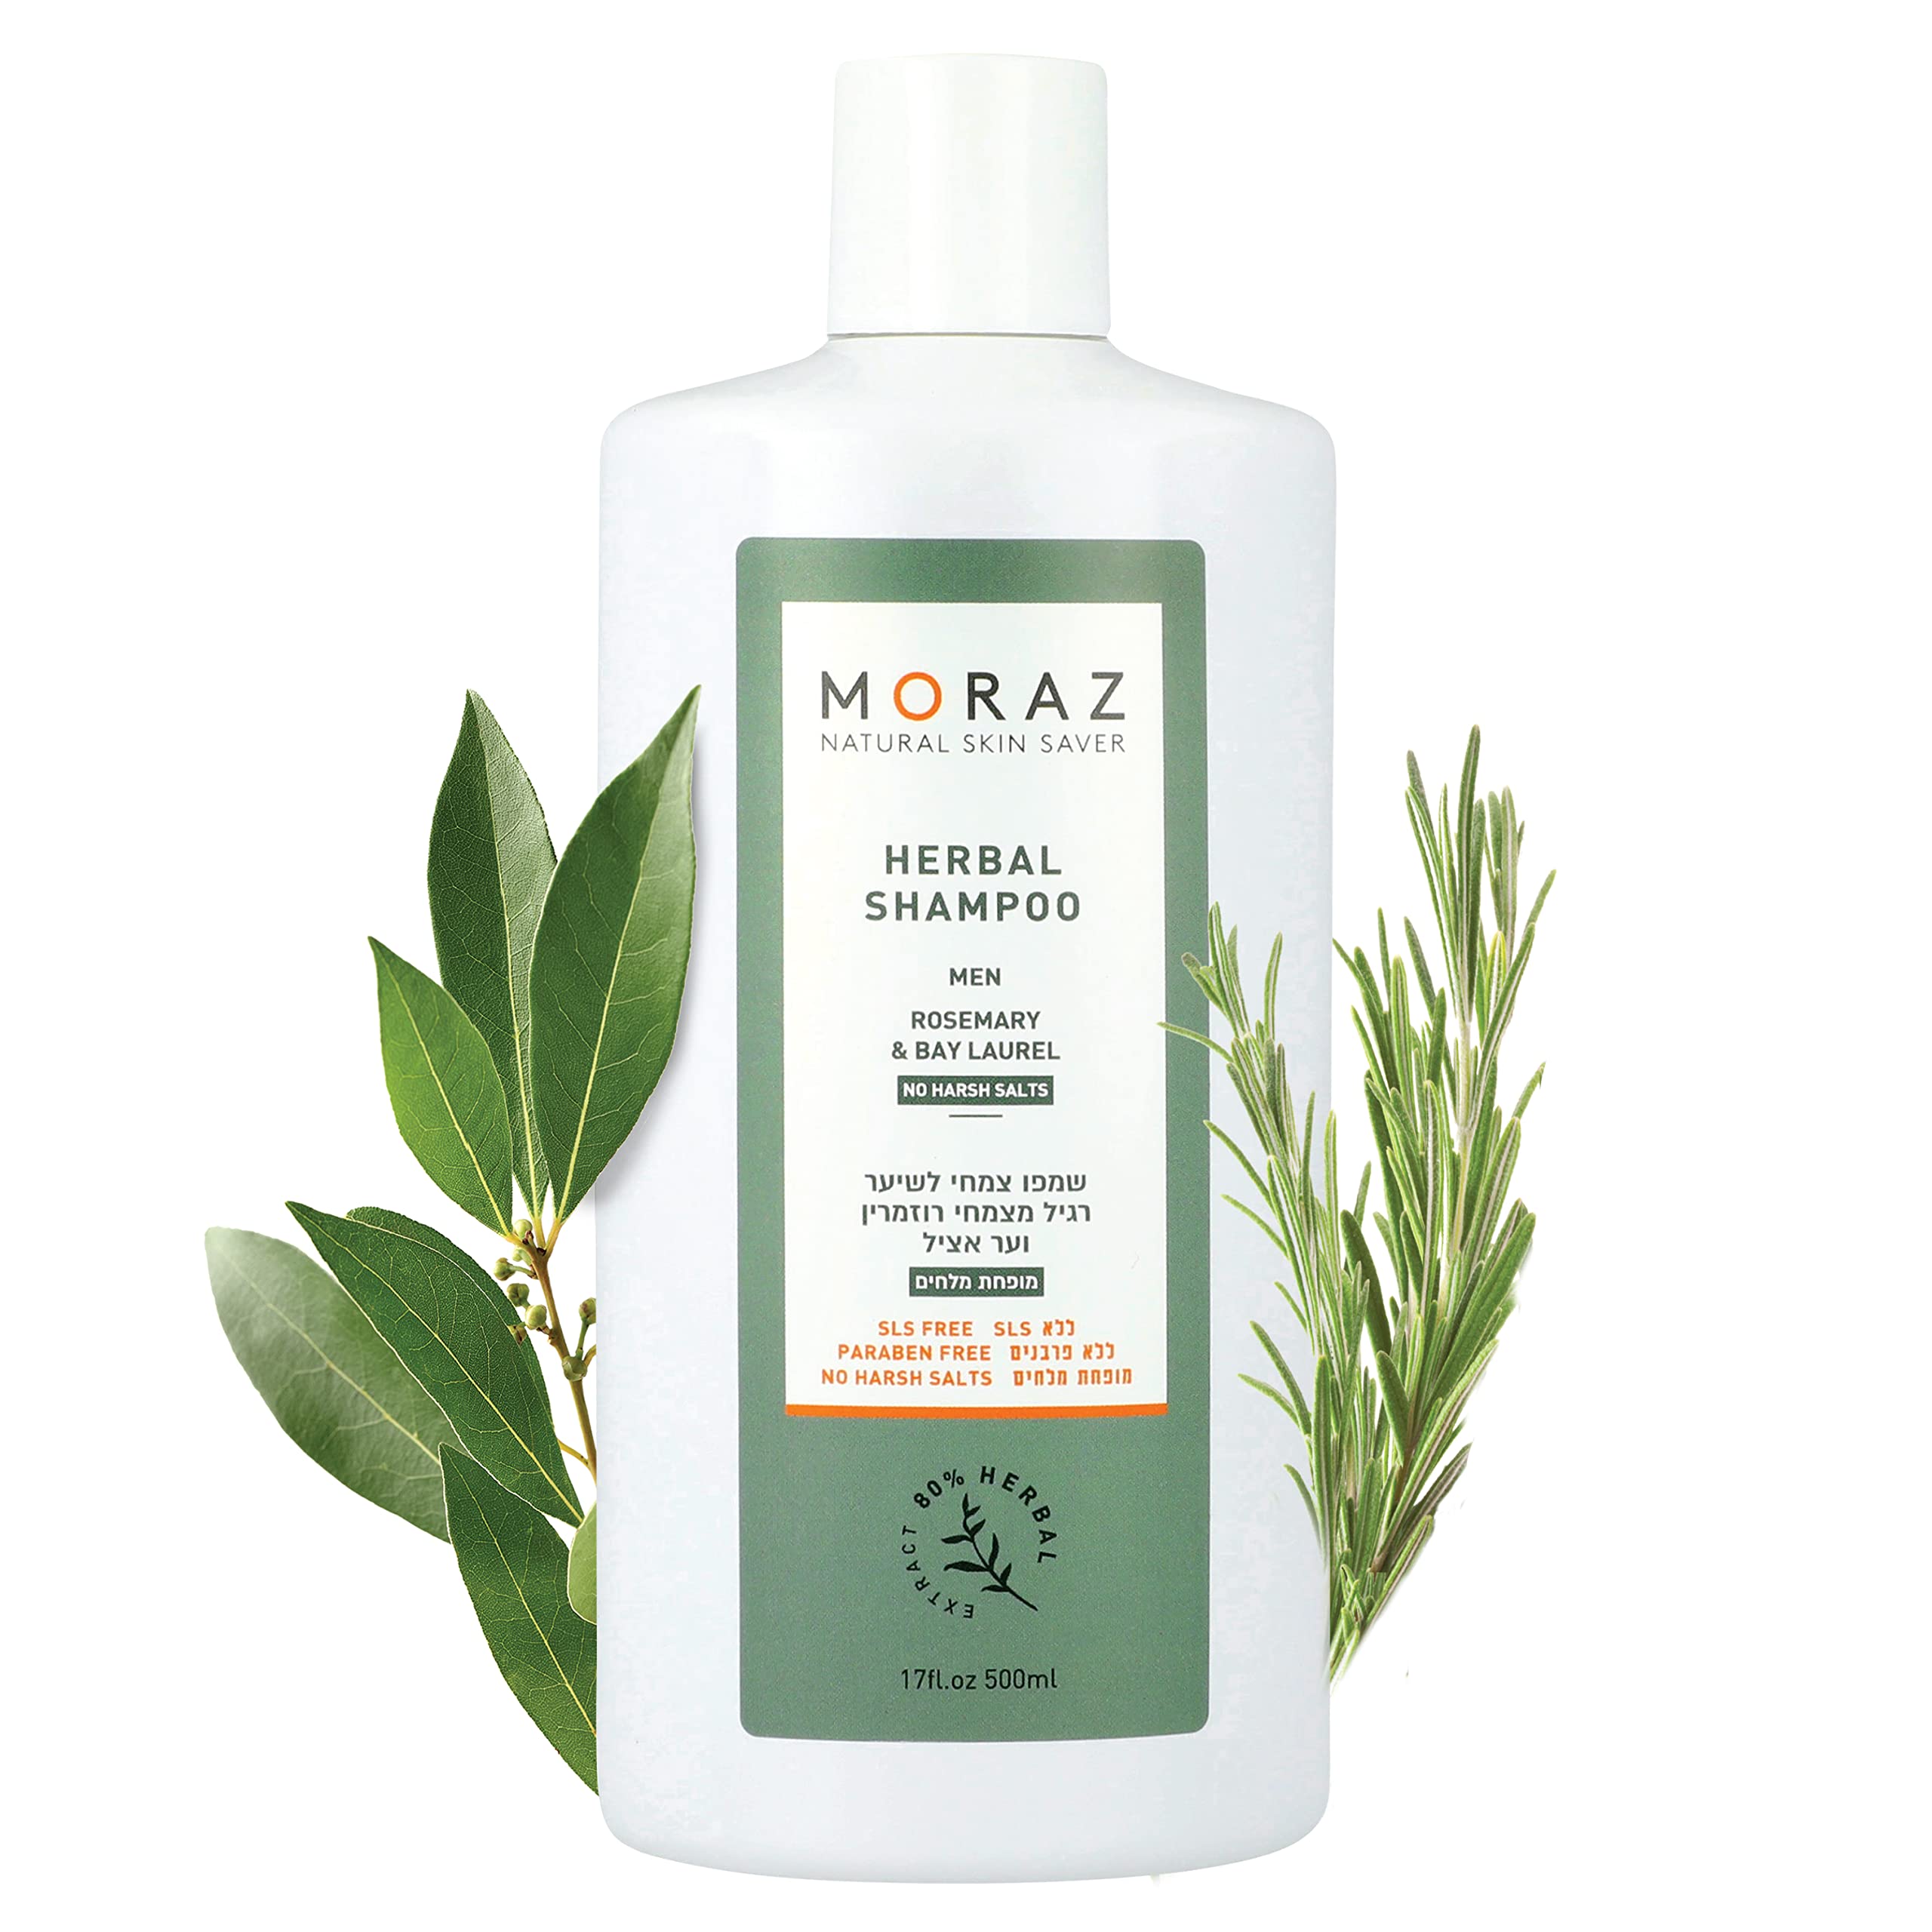 MORAZ Men's Shampoo for Thinning Hair and Hair Loss - Moisturizing, Nourishing & Strengthening Organic Shampoo for Hair & Scalp - Paraben & Sulphate Free - 17 Fl Oz